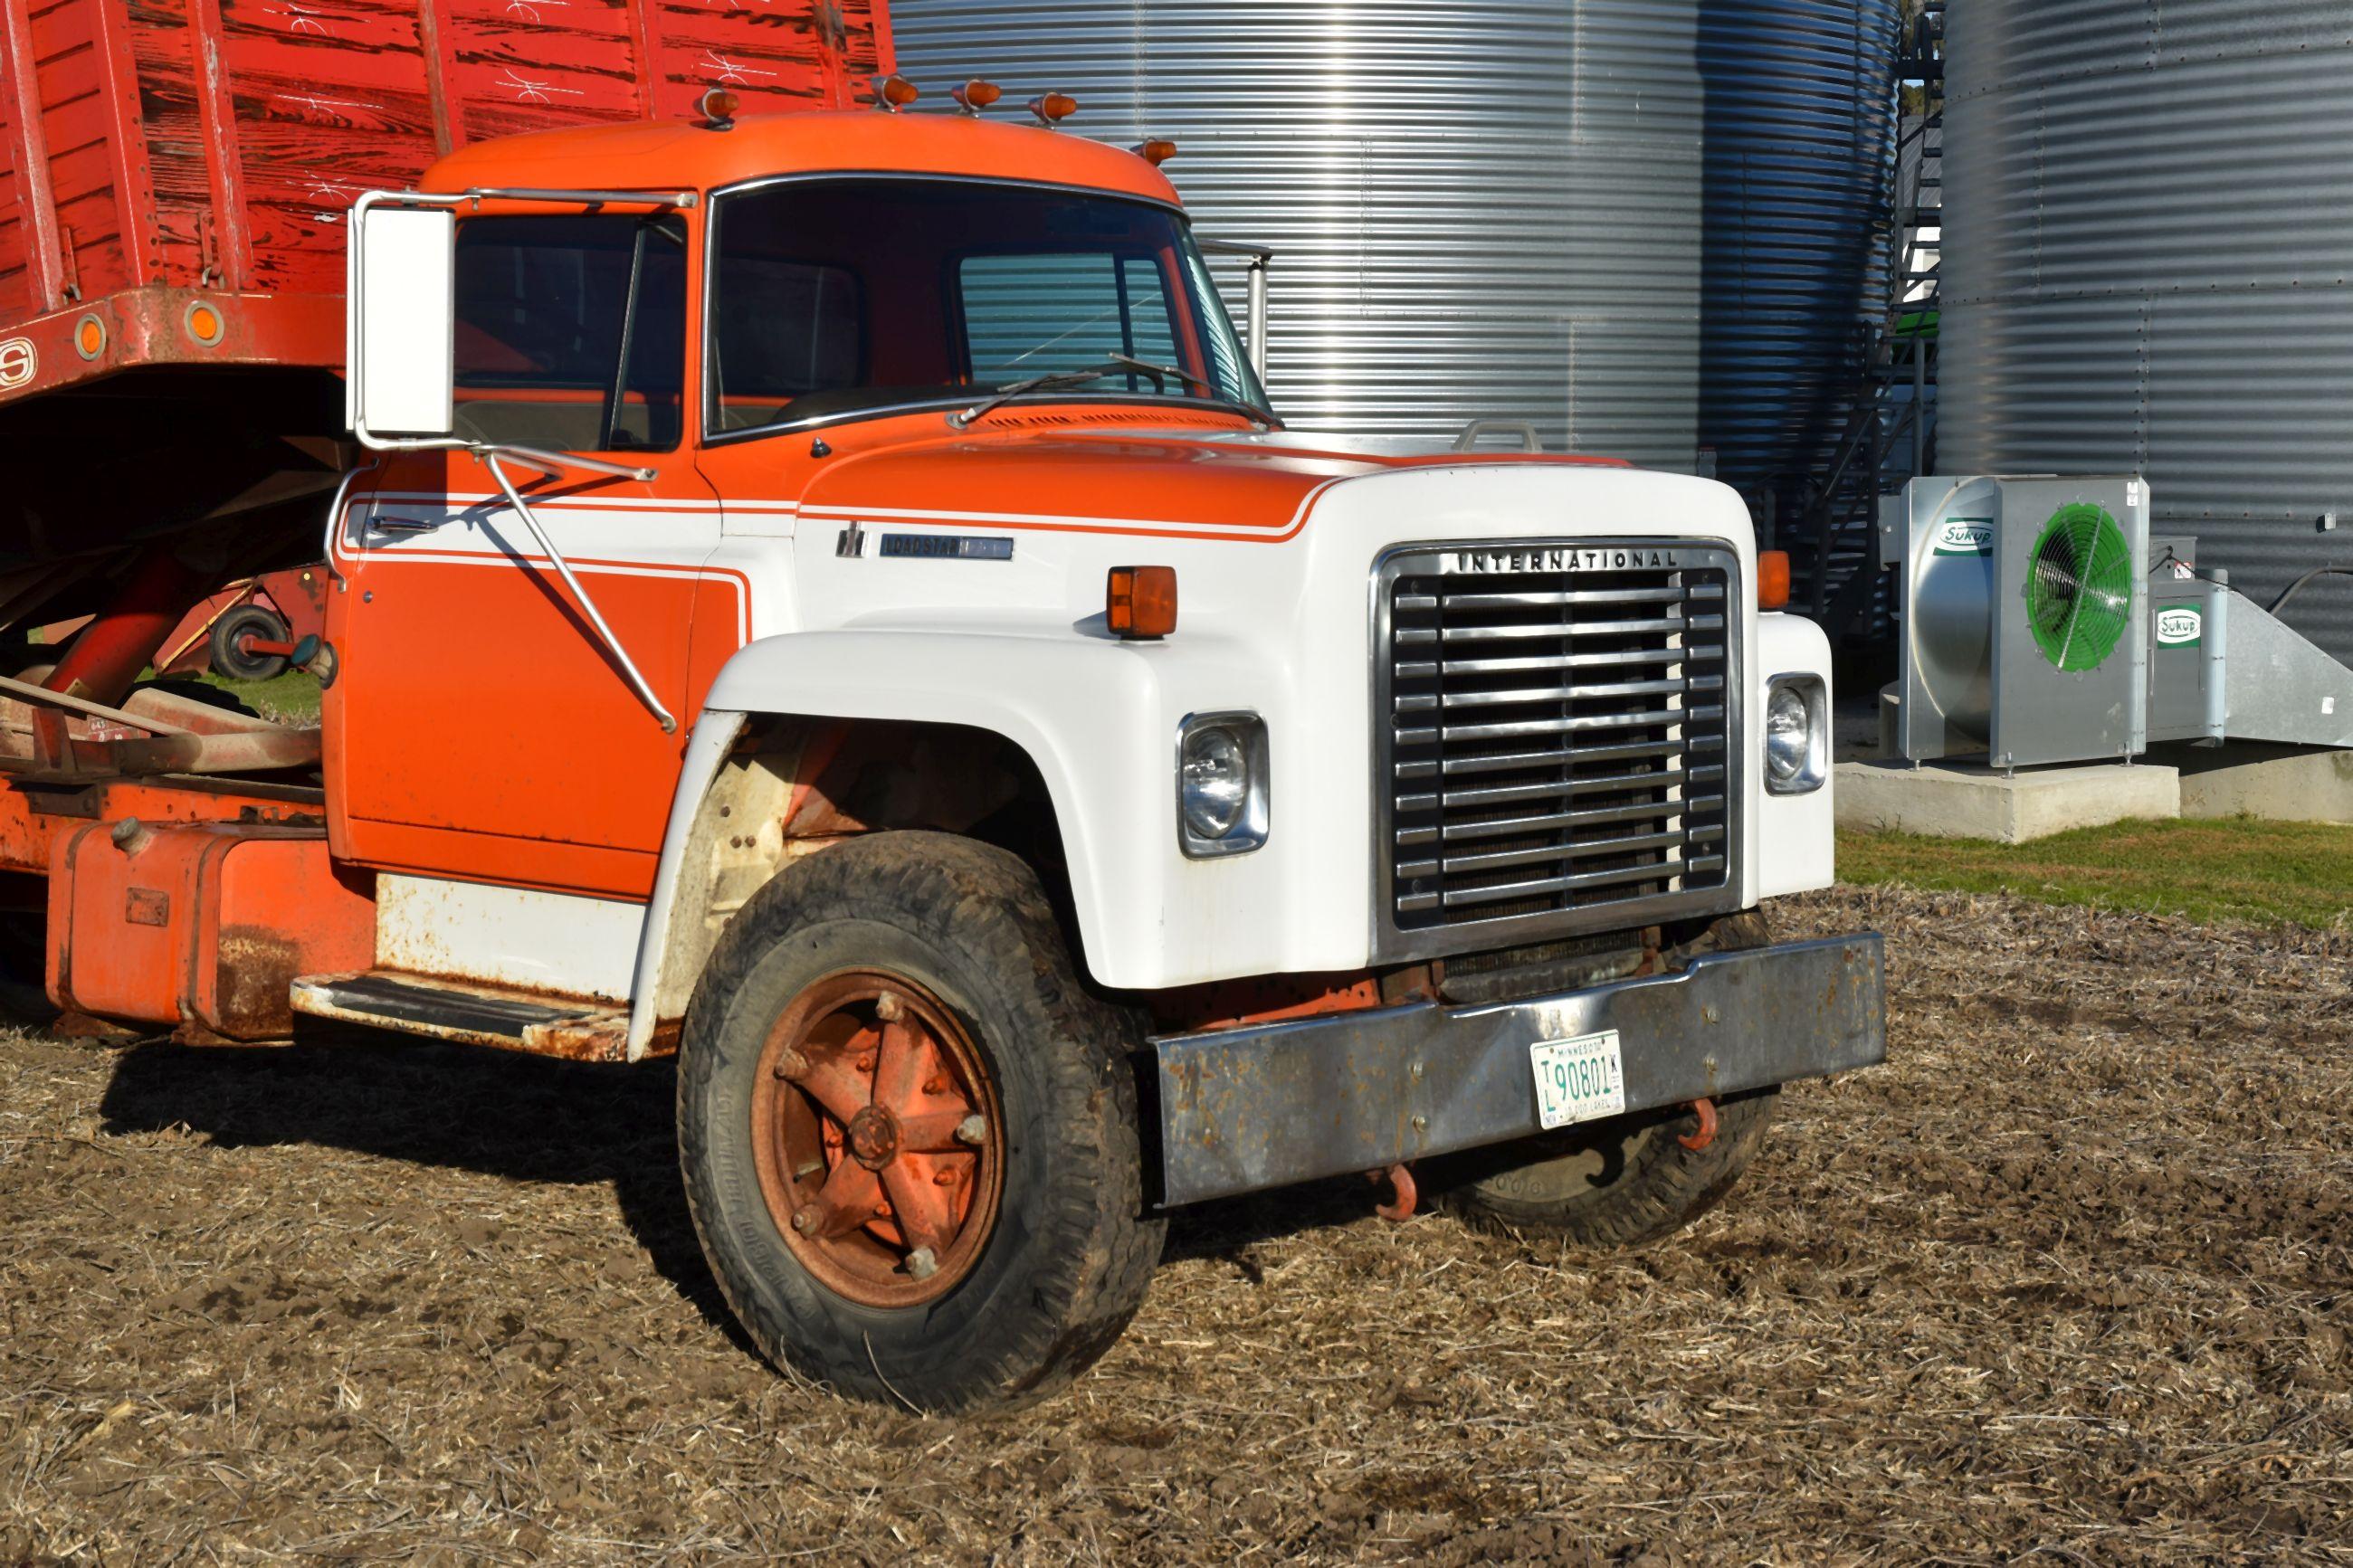 1976 International Loadstar 1700 Grain Truck 404 Gas V8, 5 x 2 Speed, 57,265 Actual Miles, 9.00-20 T